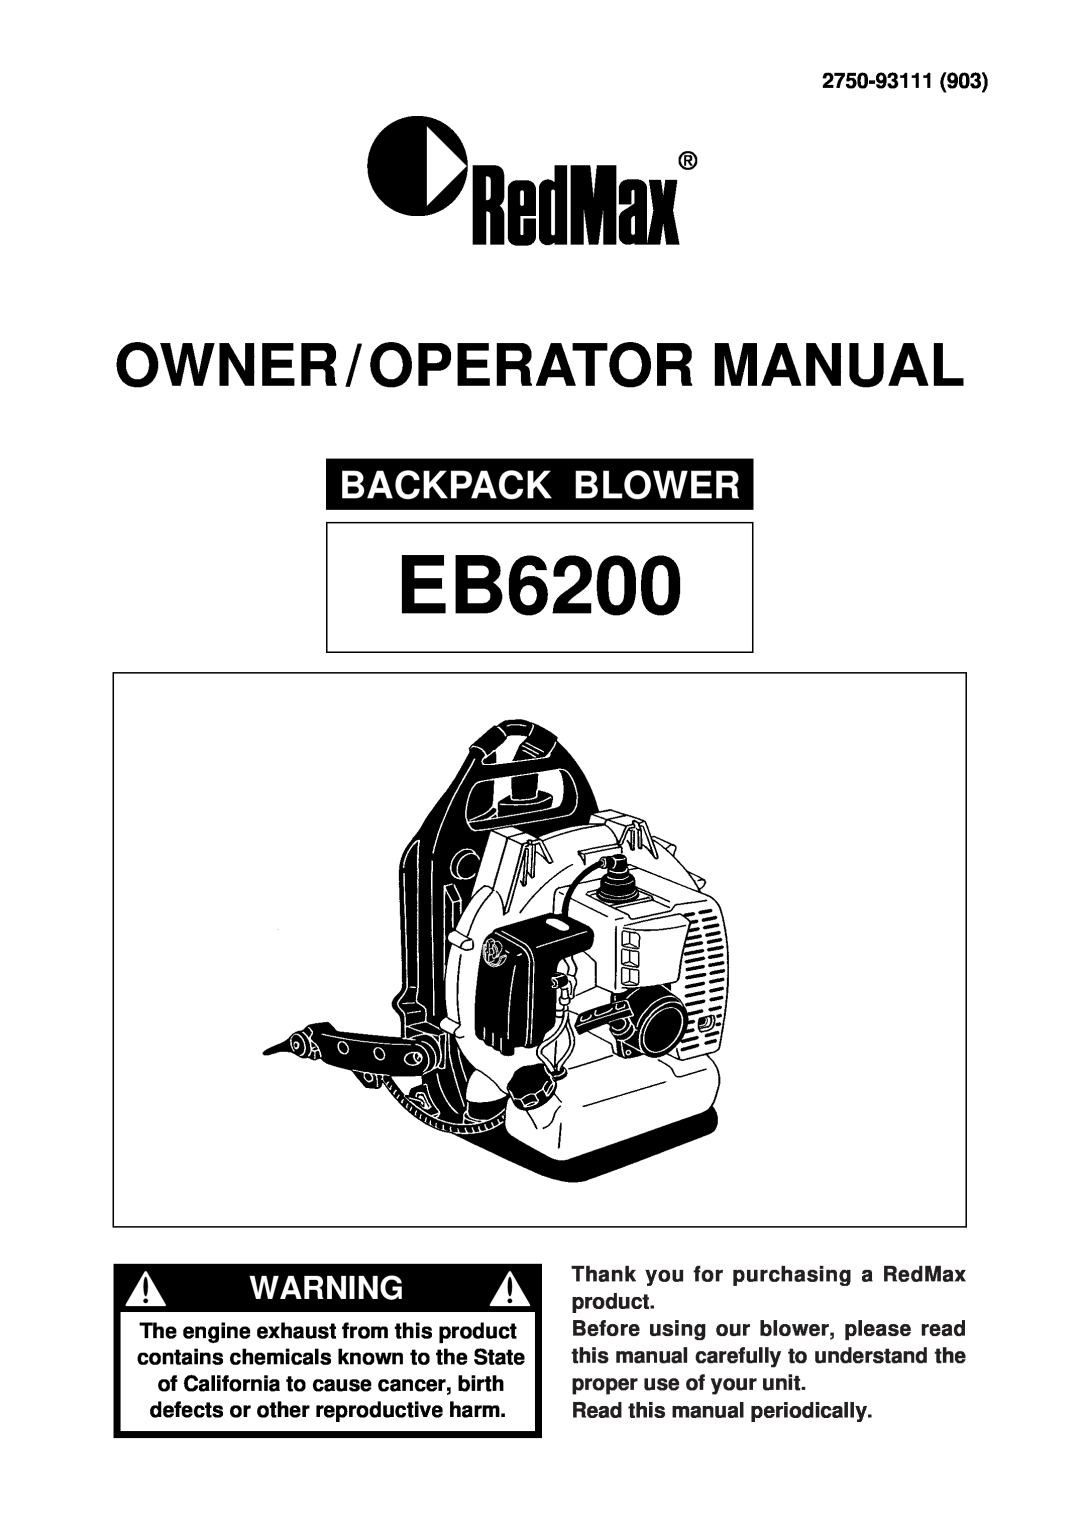 RedMax EB6200 manual Backpack Blower, Owner / Operator Manual 